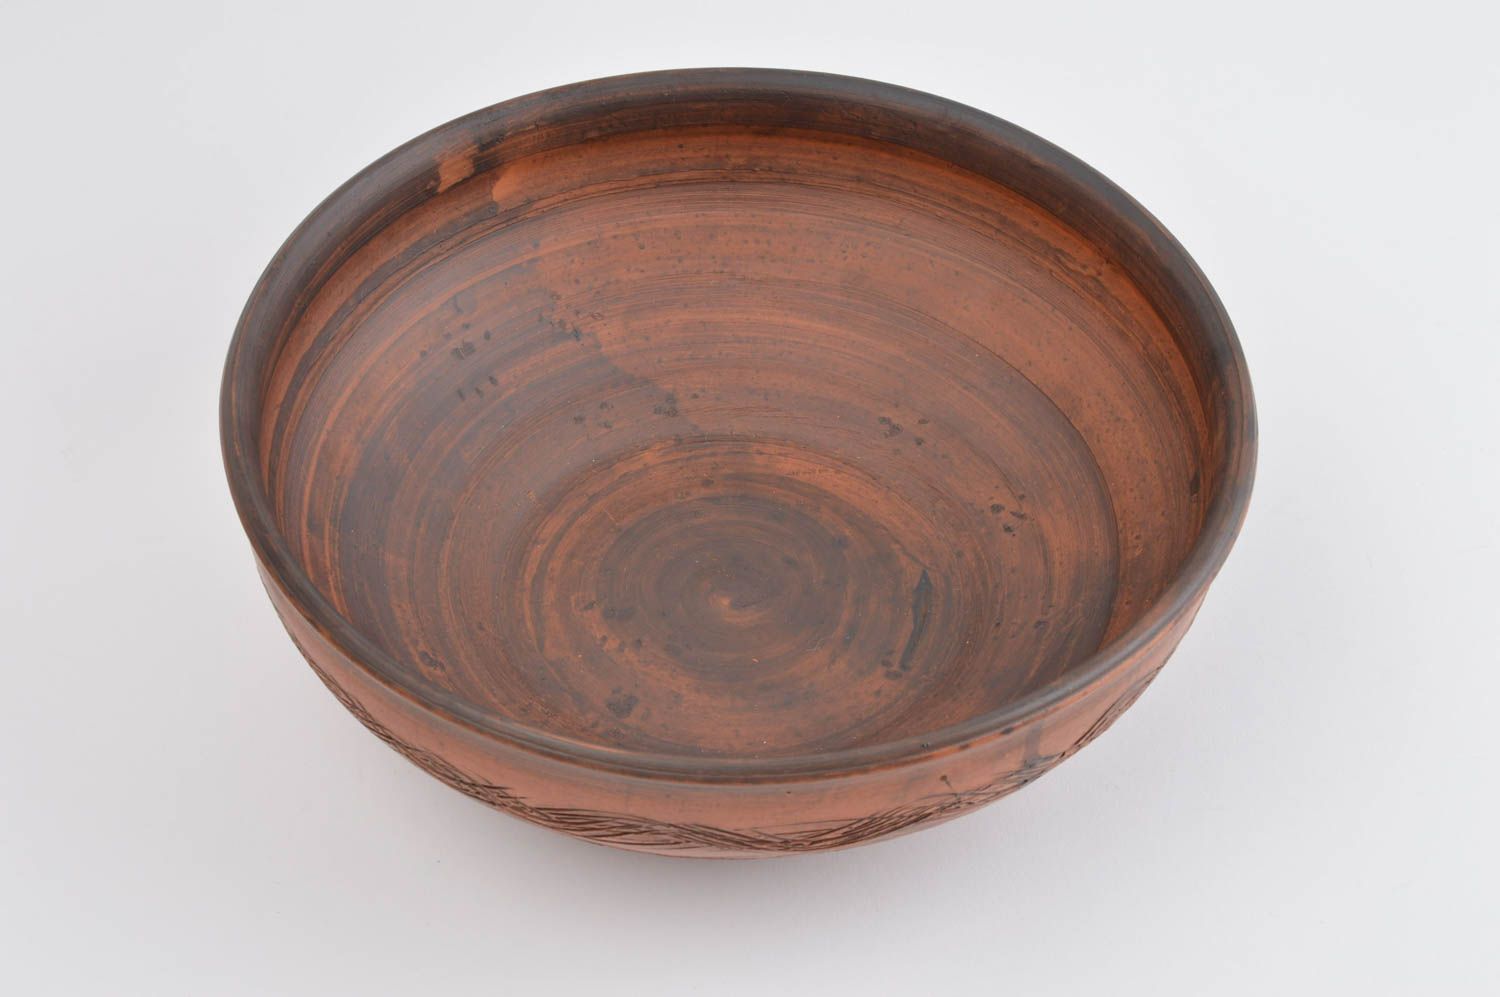 Beautiful handmade ceramic bowl salad bowl designs home ceramics gift ideas photo 2